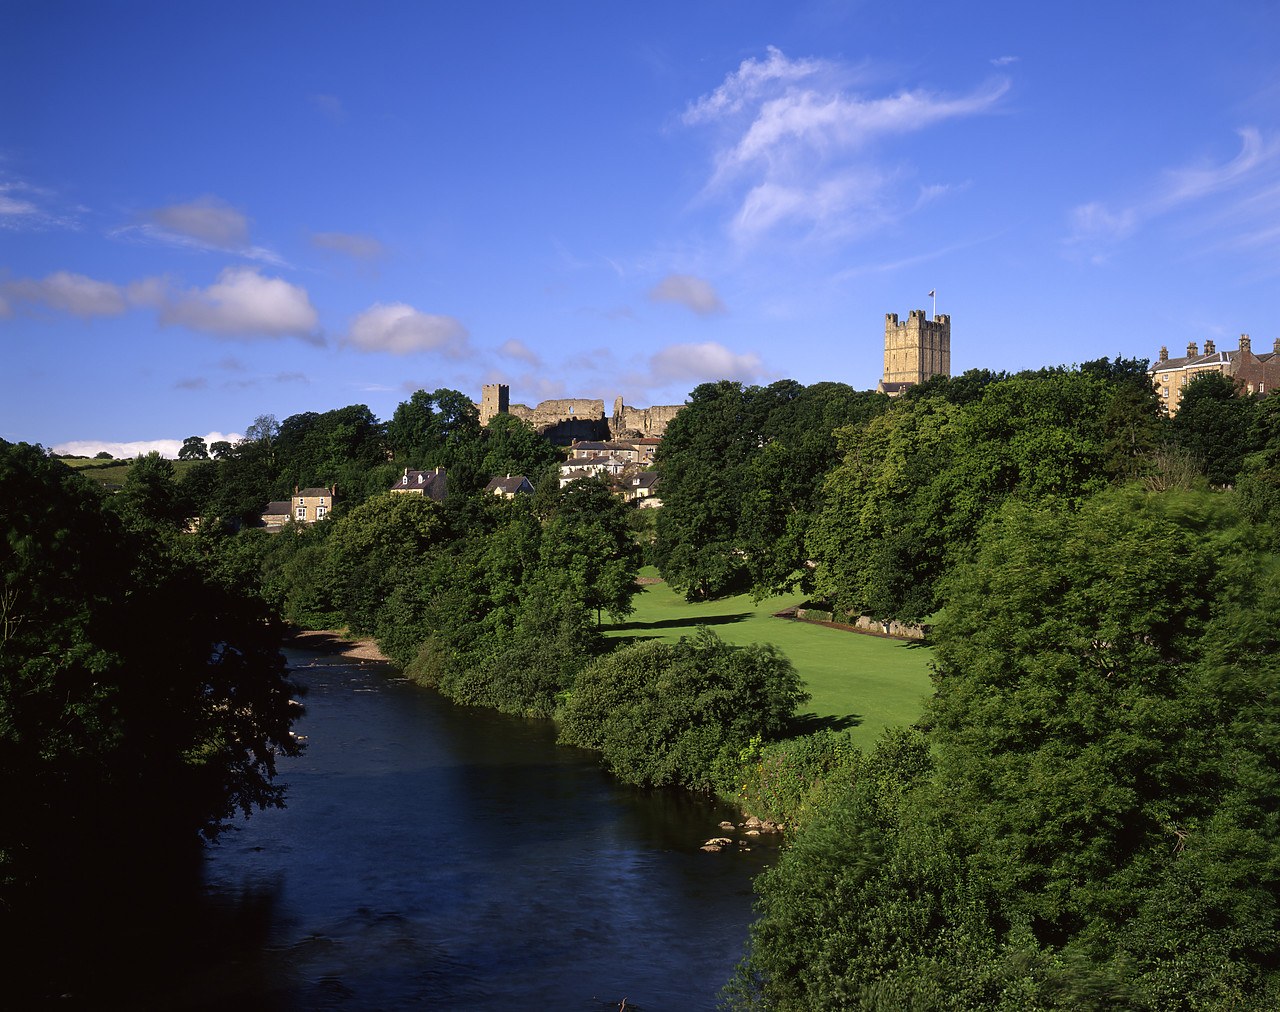 #970366-2 - River Swale & Richmond, North Yorkshire, England